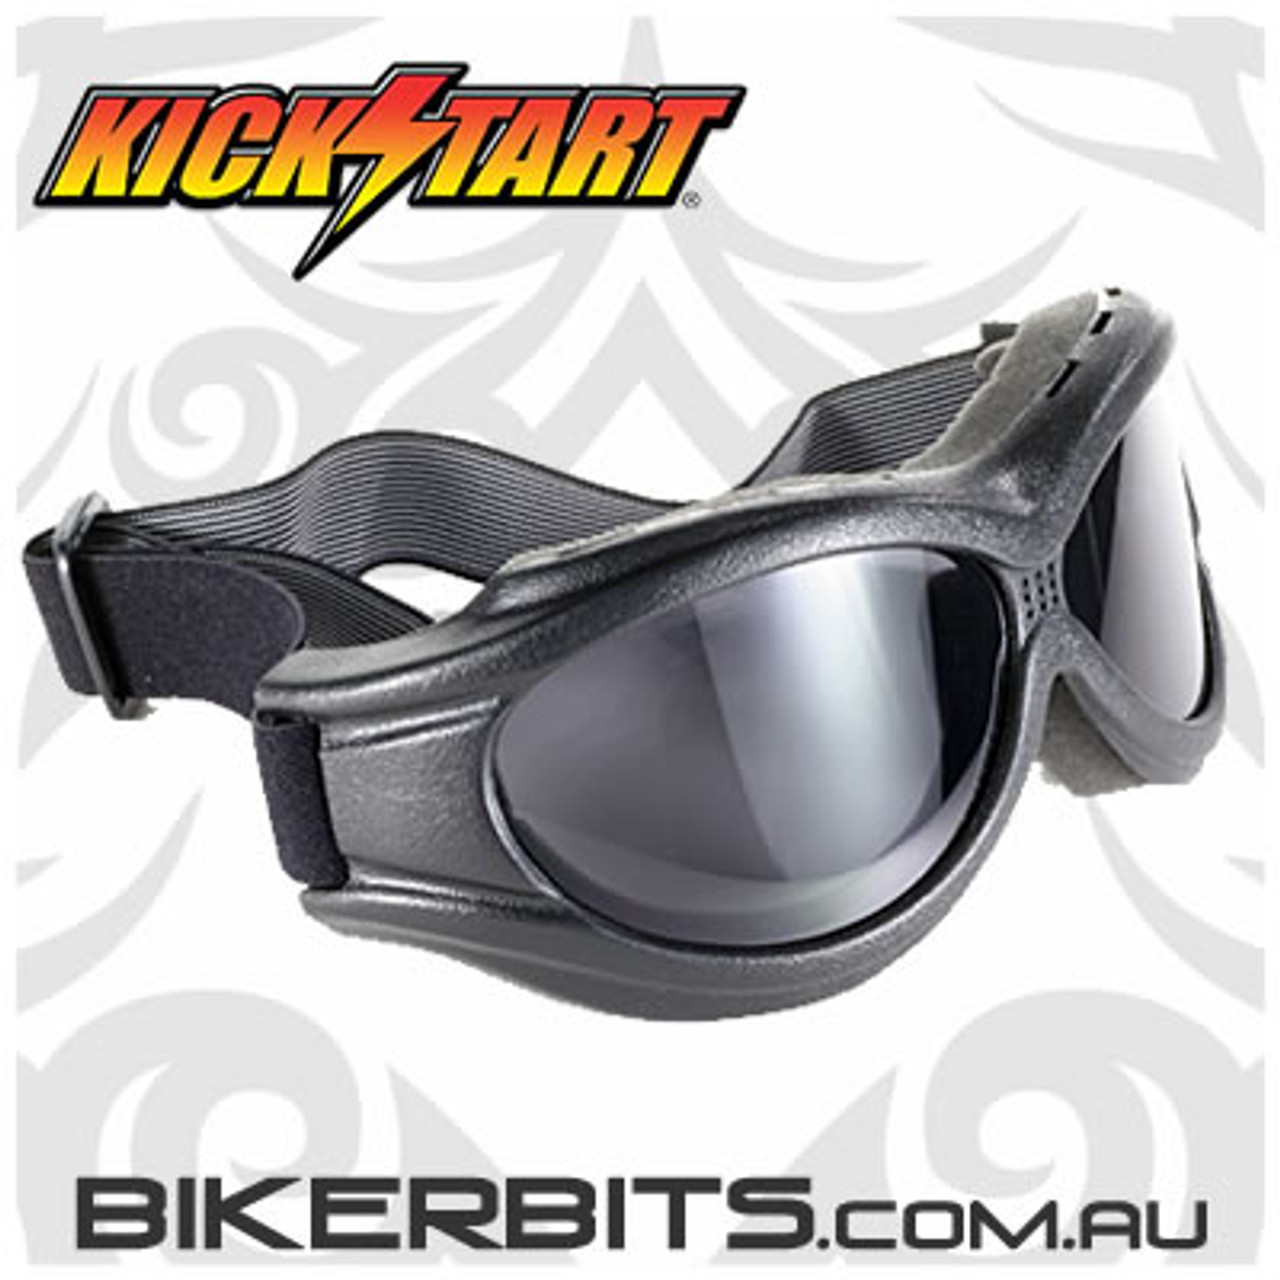 Motorcycle Goggles - Kickstart Beast- Smoke/Black